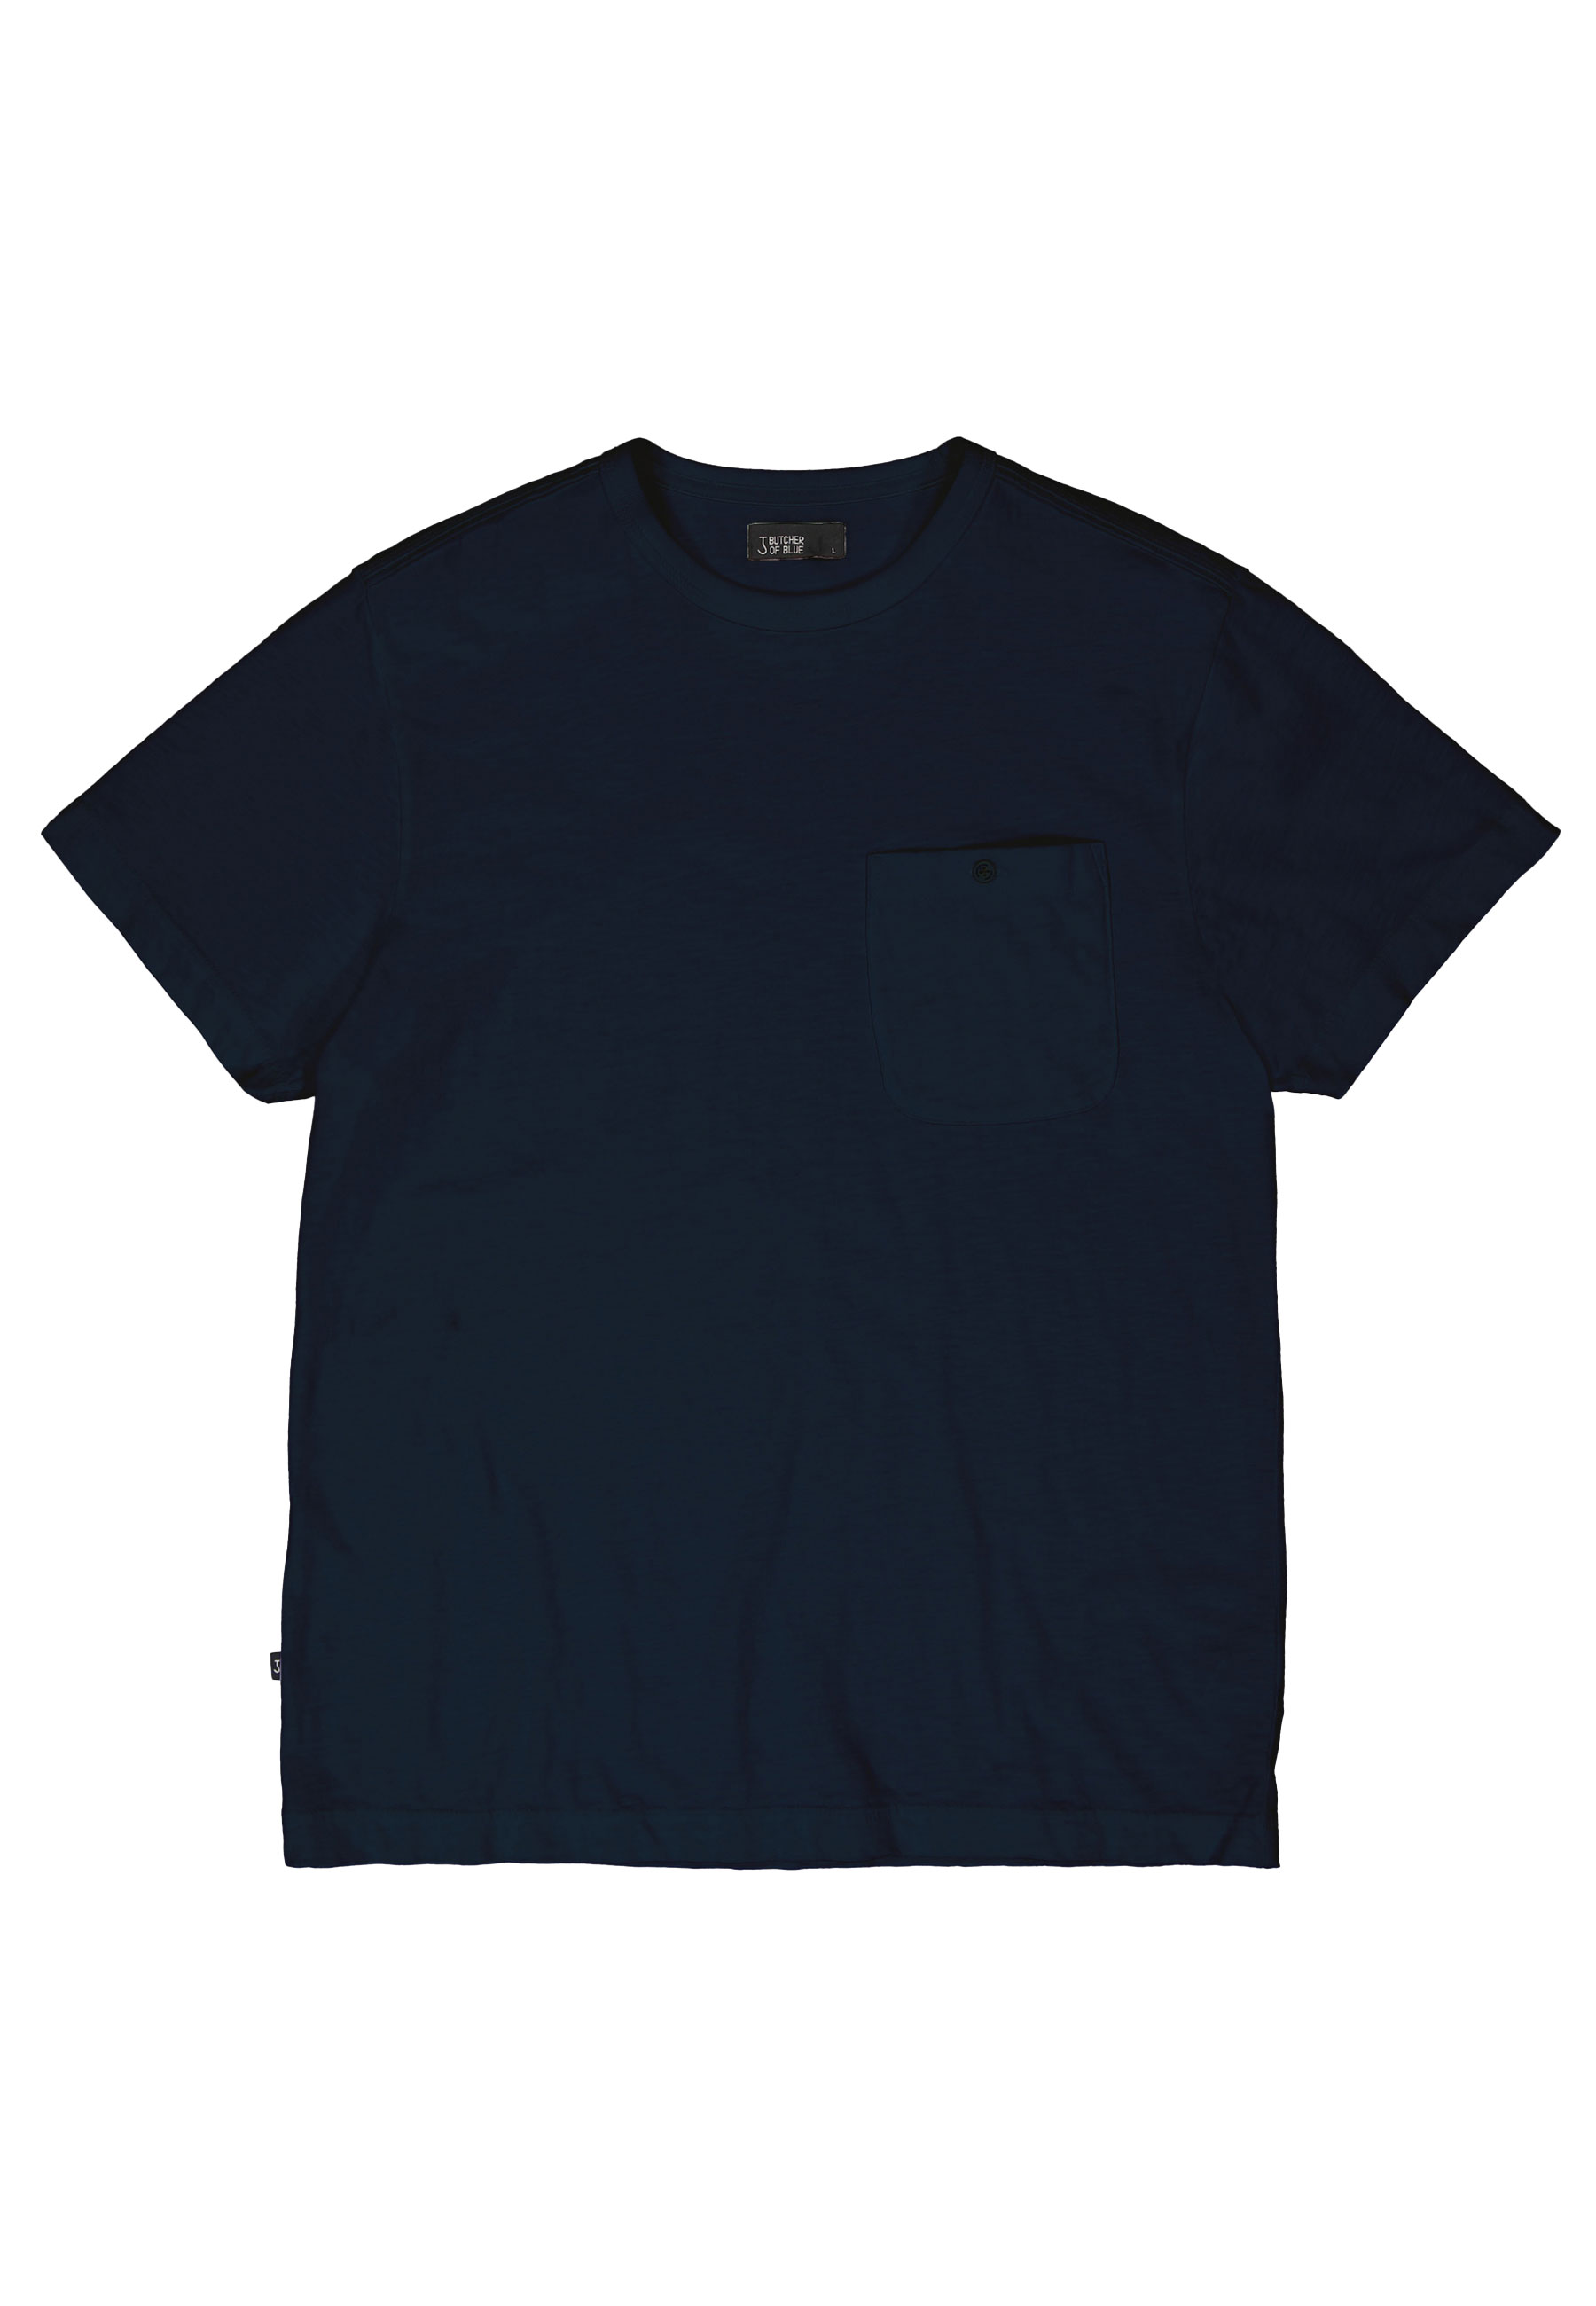 Shirt Donkerblauw Arthur pocket t-shirts donkerblauw